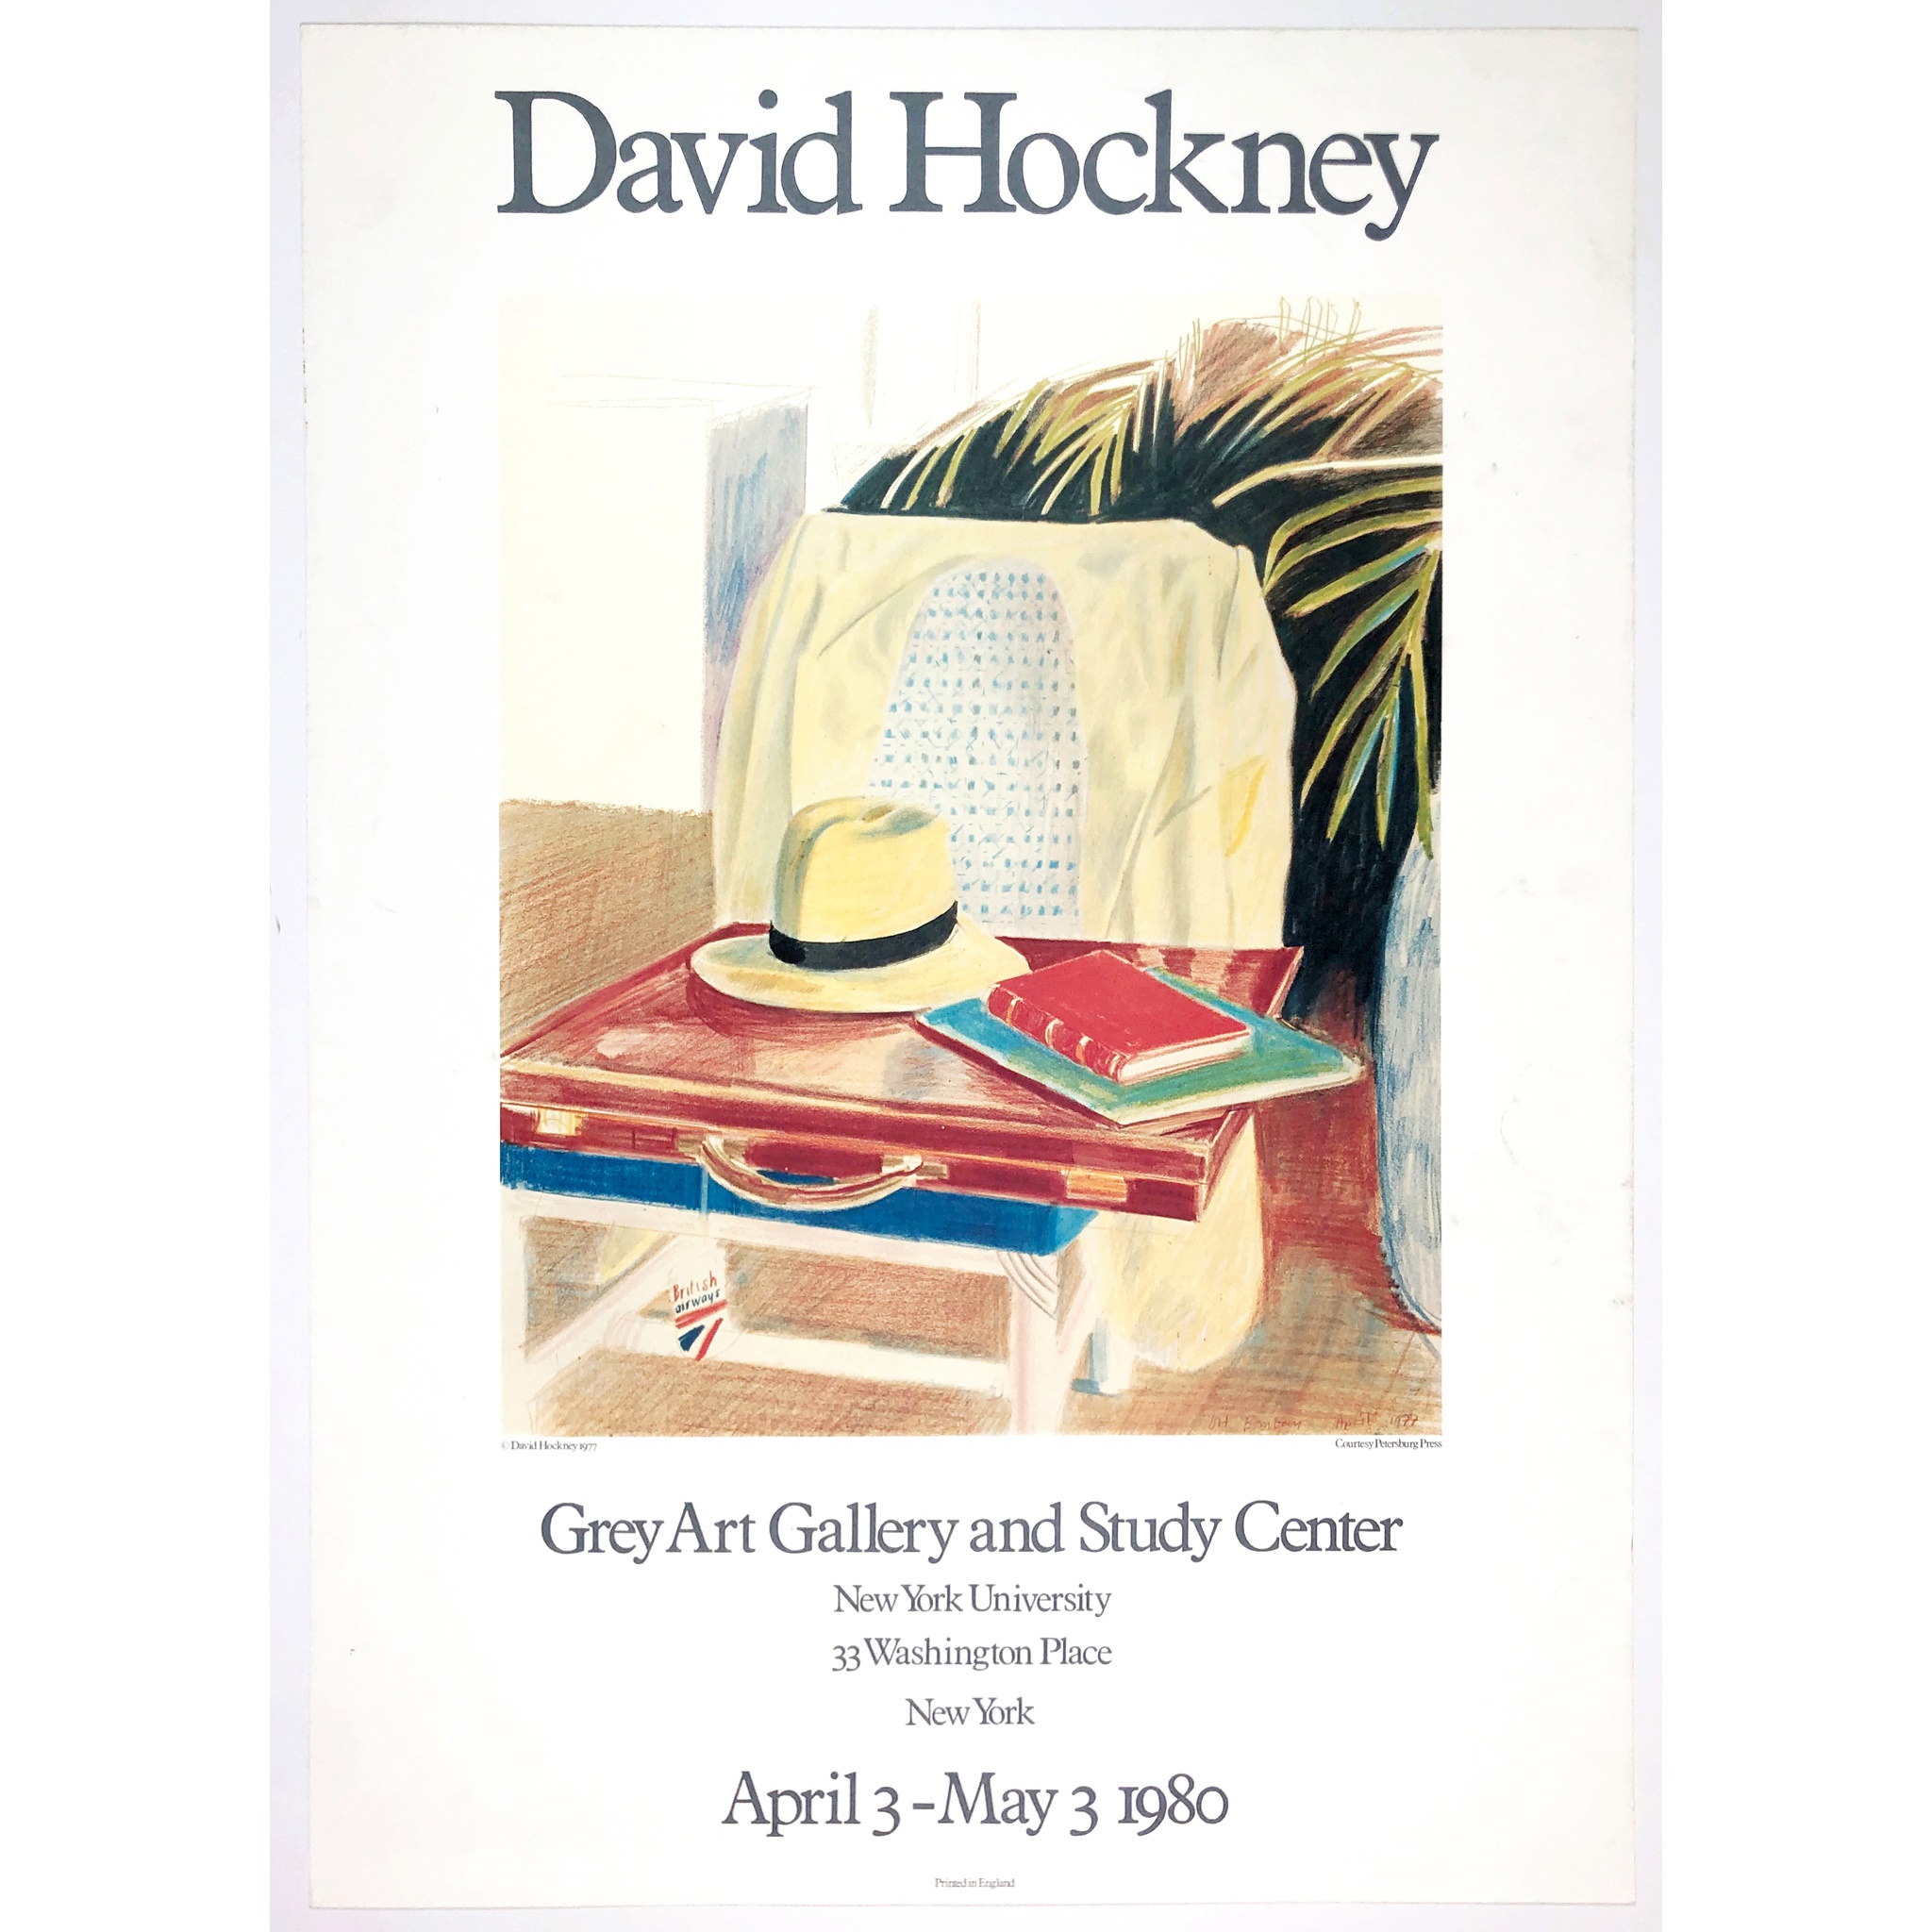 AFTER DAVID HOCKNEY (BRITISH 1937- ) GREY ART GALLERY AND STUDY CENTER